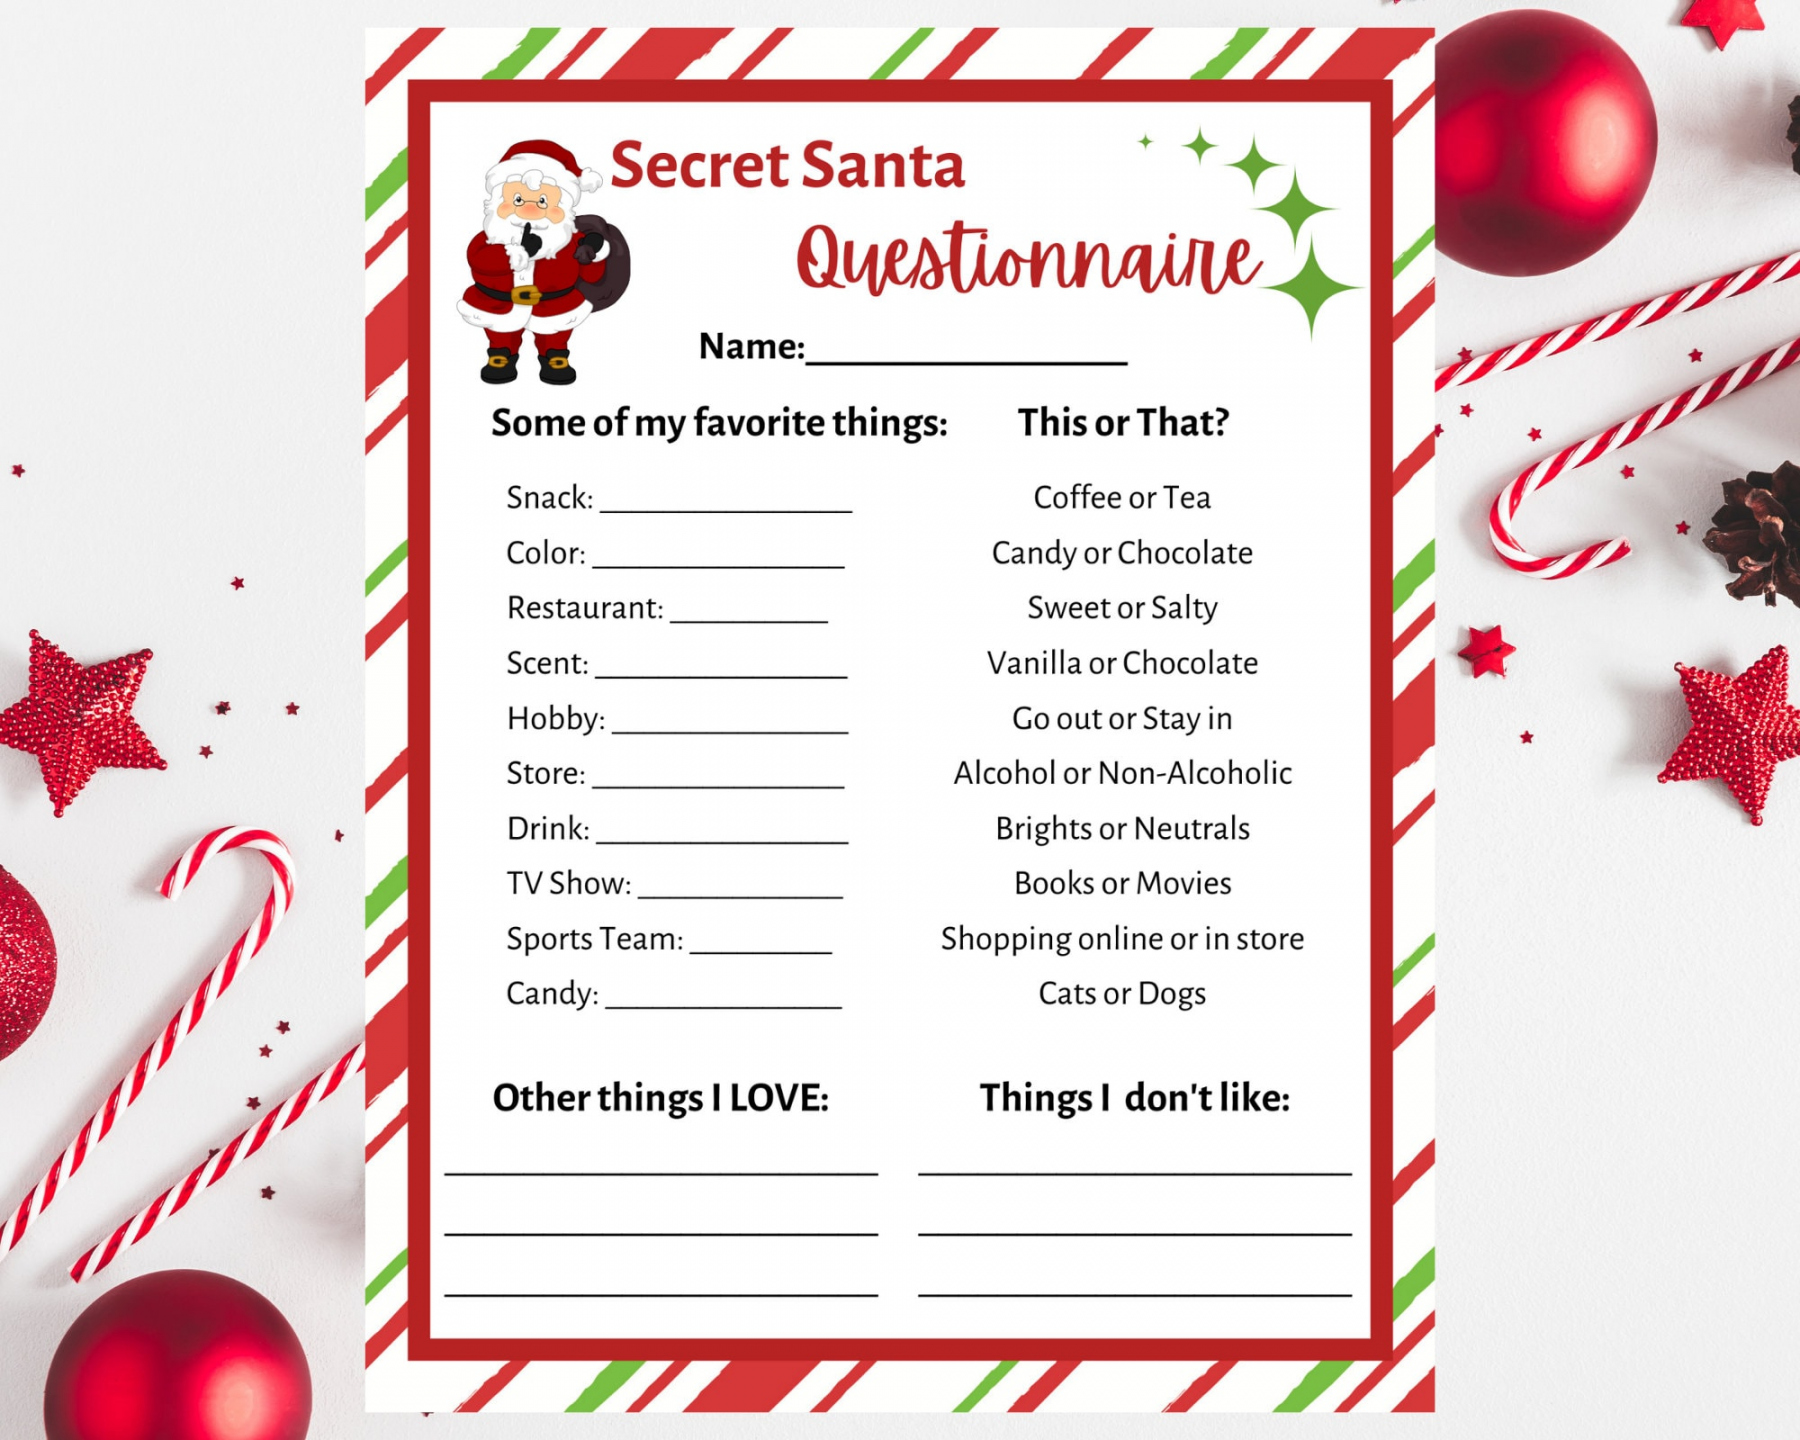 Free Printable Secret Santa Questions - Printable - Secret Santa Questionnaire Printable. Secret Santa Form